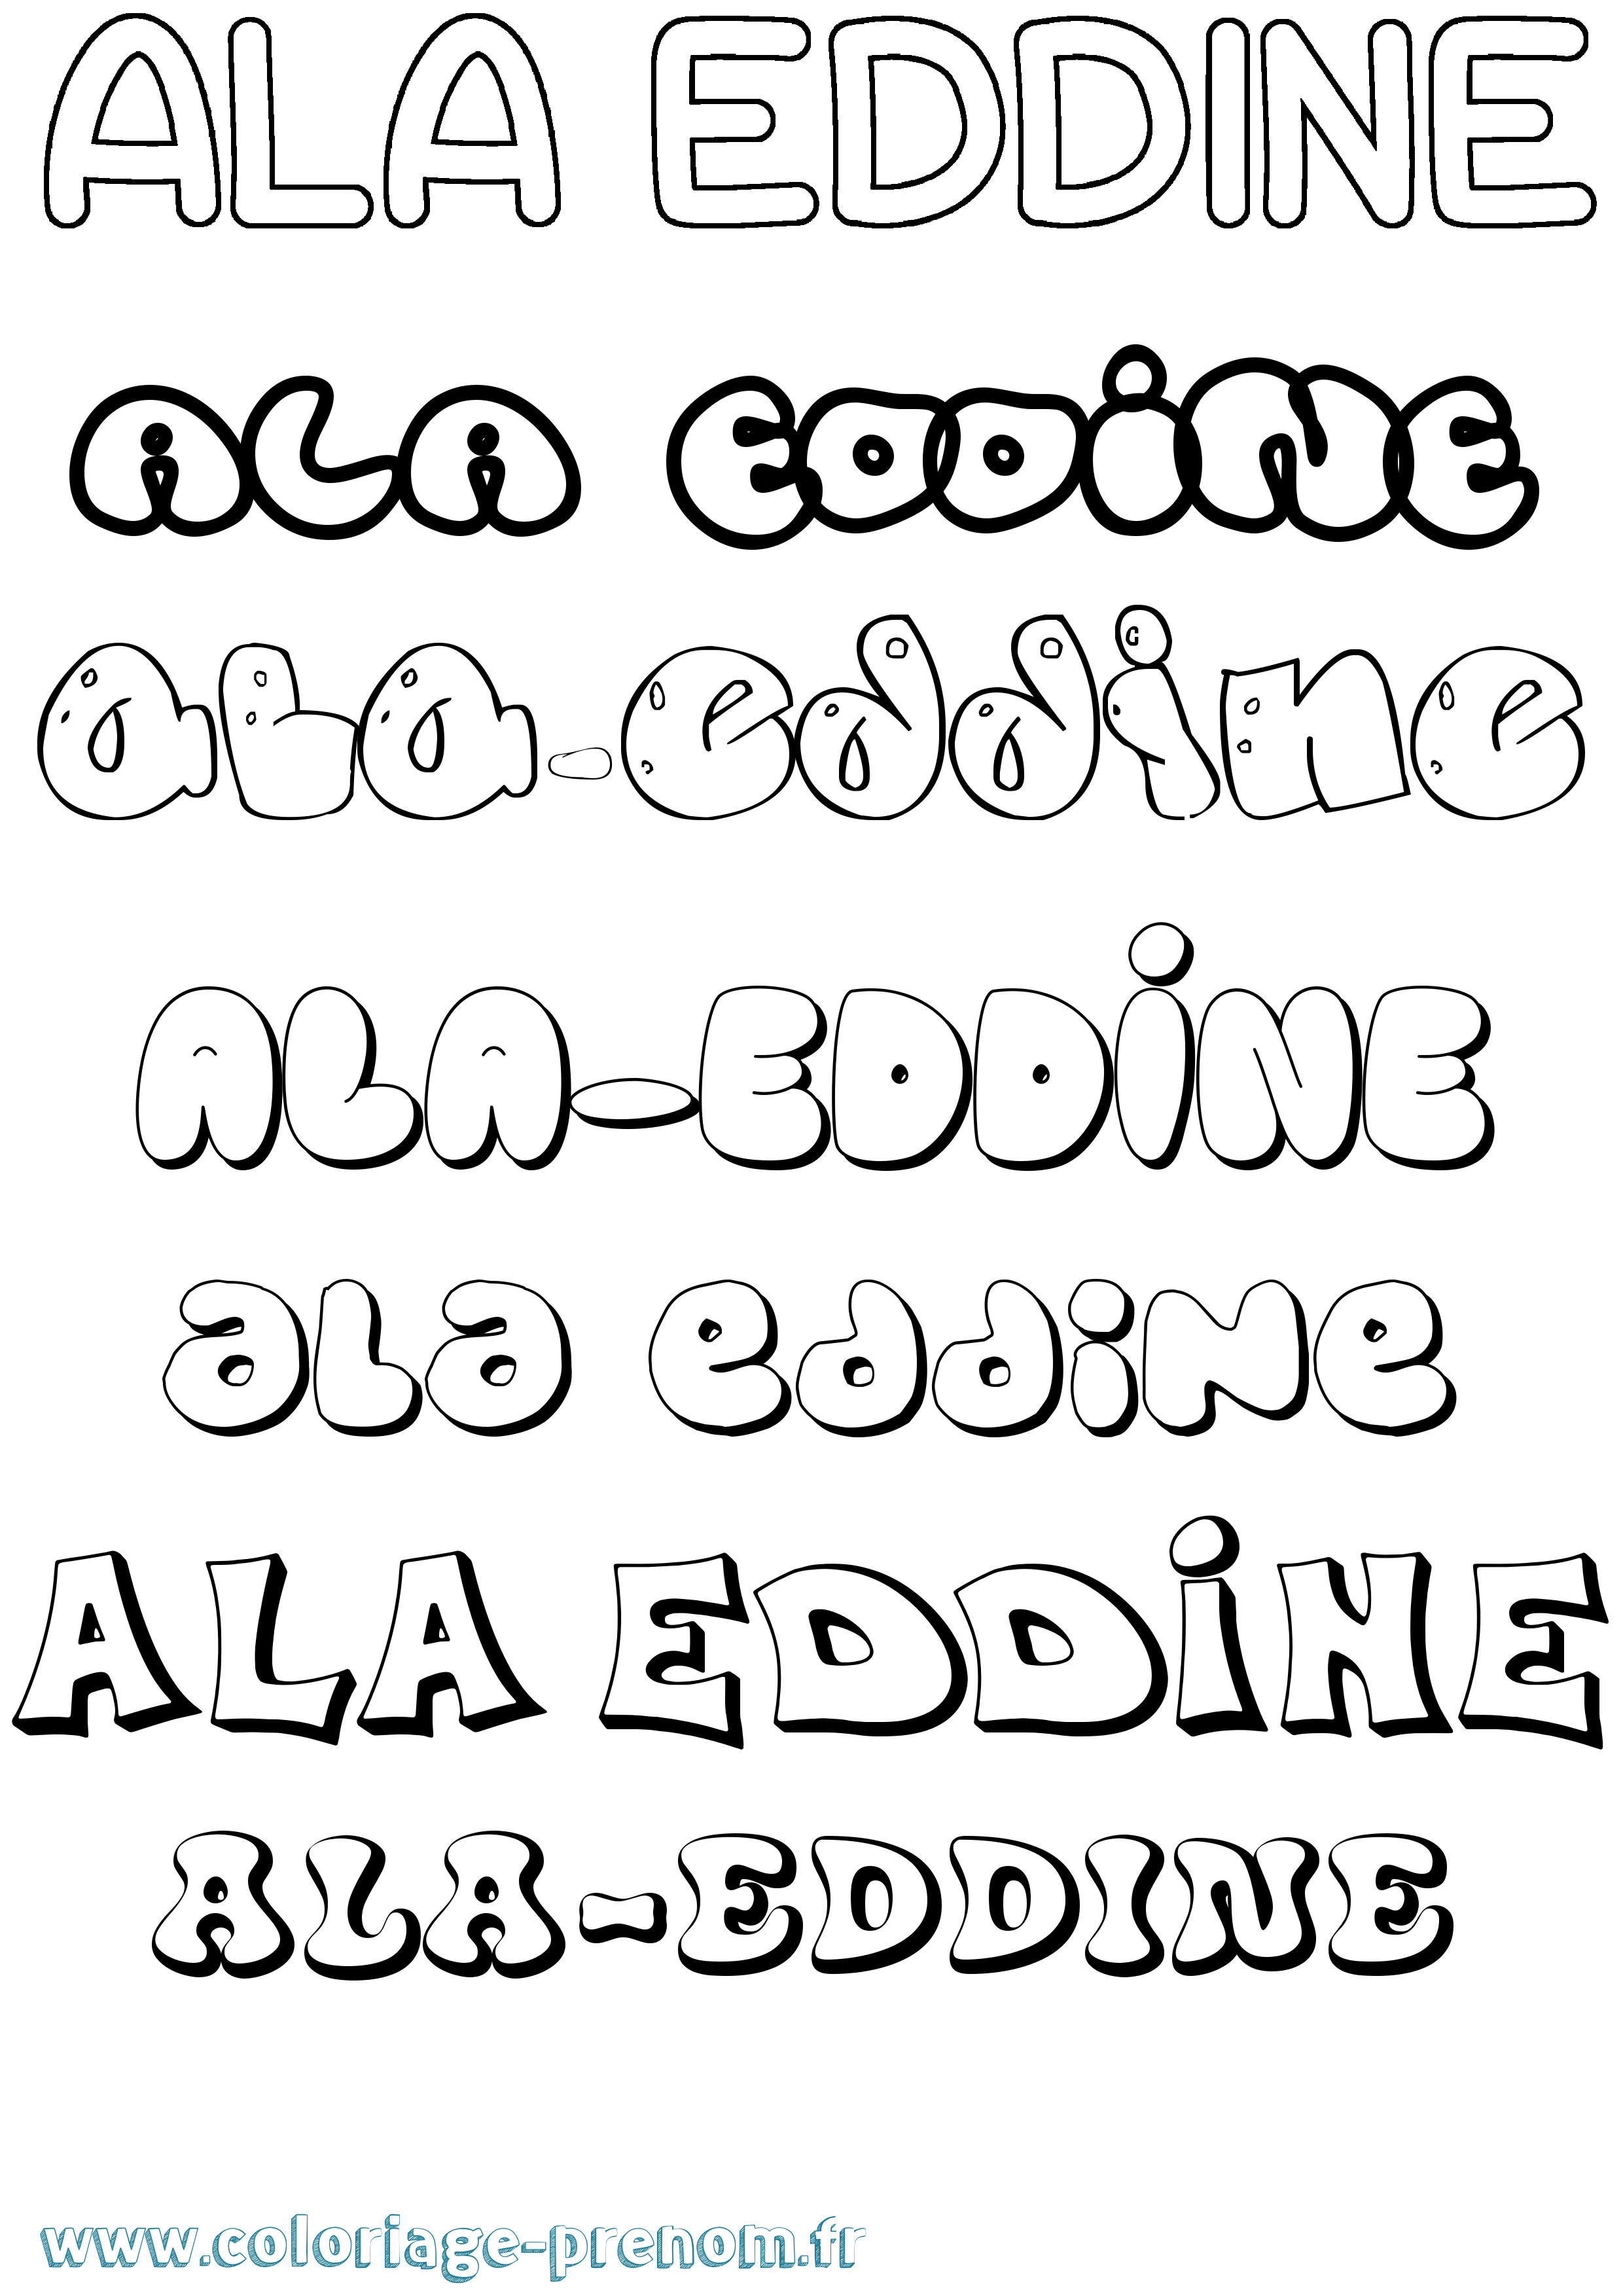 Coloriage prénom Ala-Eddine Bubble